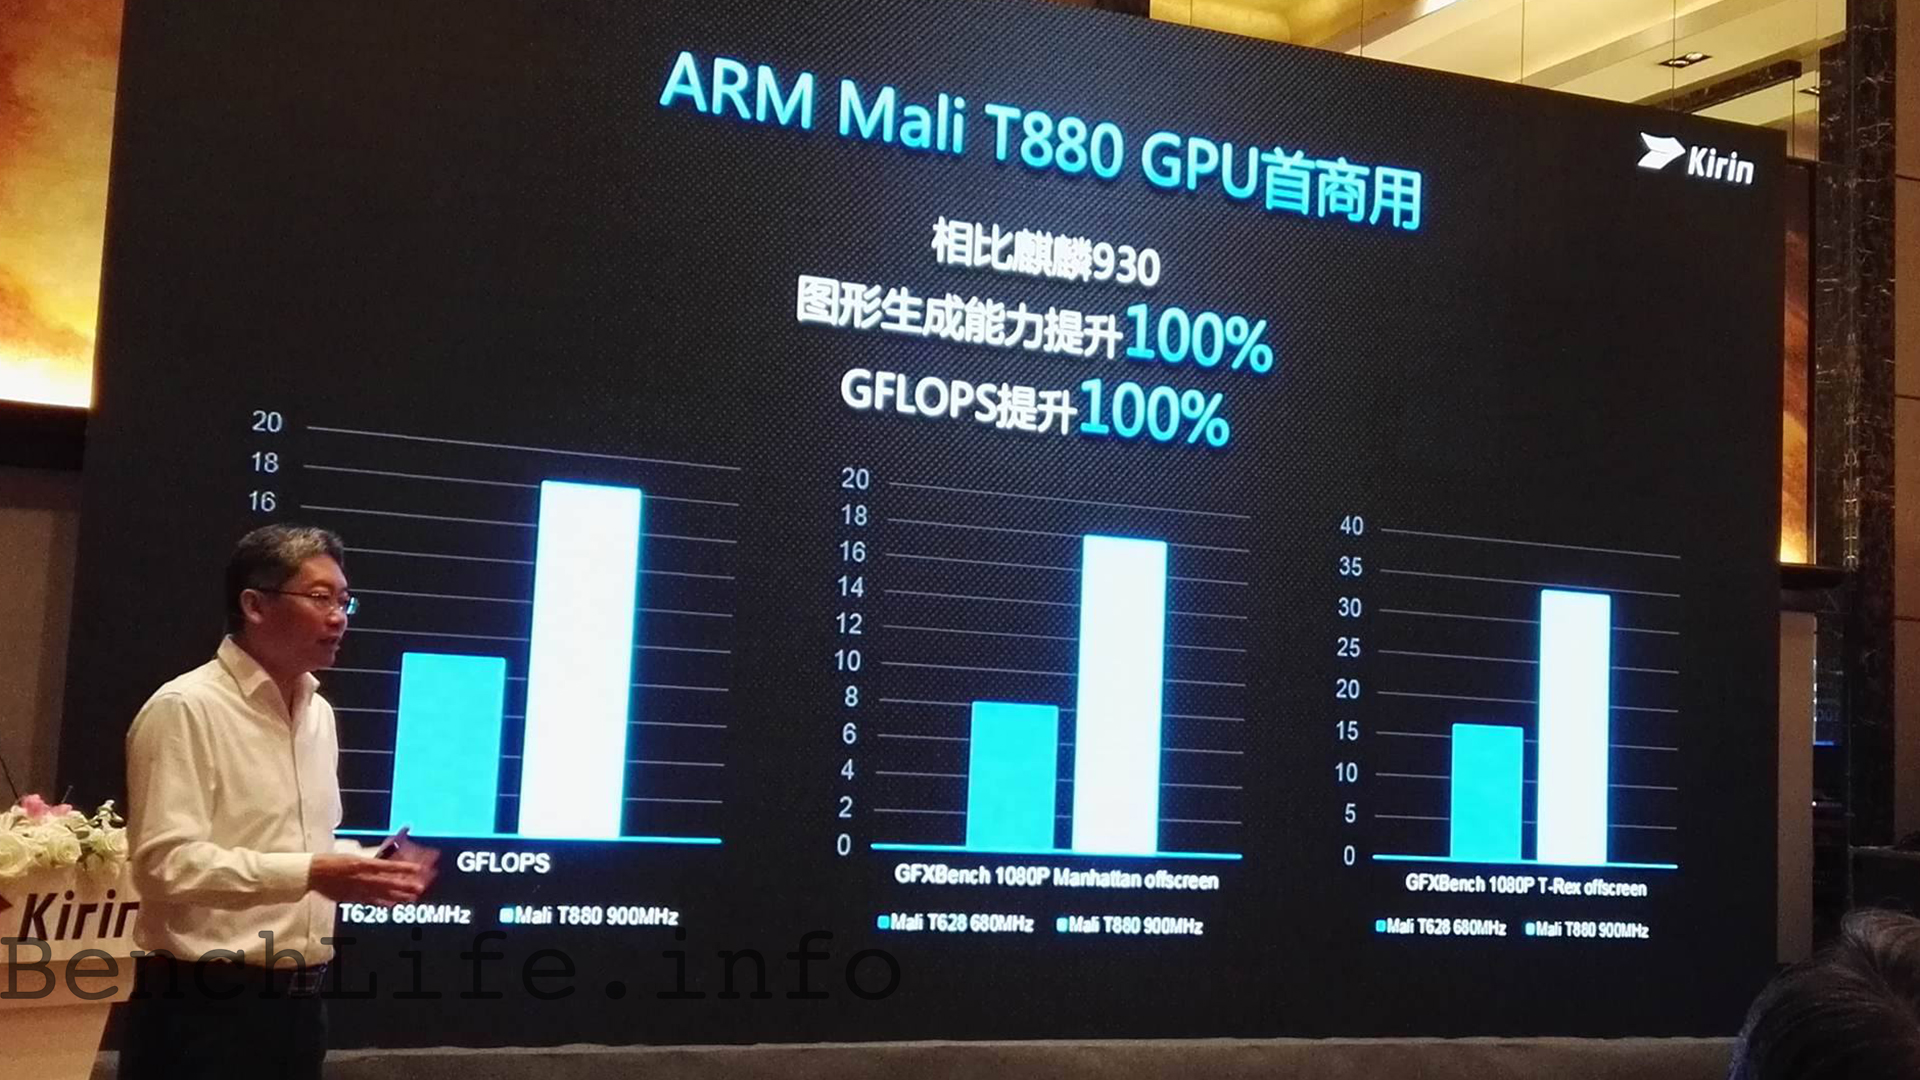 Por el contrario Bendecir Precursor ARM Mali-T880 MP4 與16nm FinFET+ 製程，Huawei Kirin 950 來了- BenchLife.info